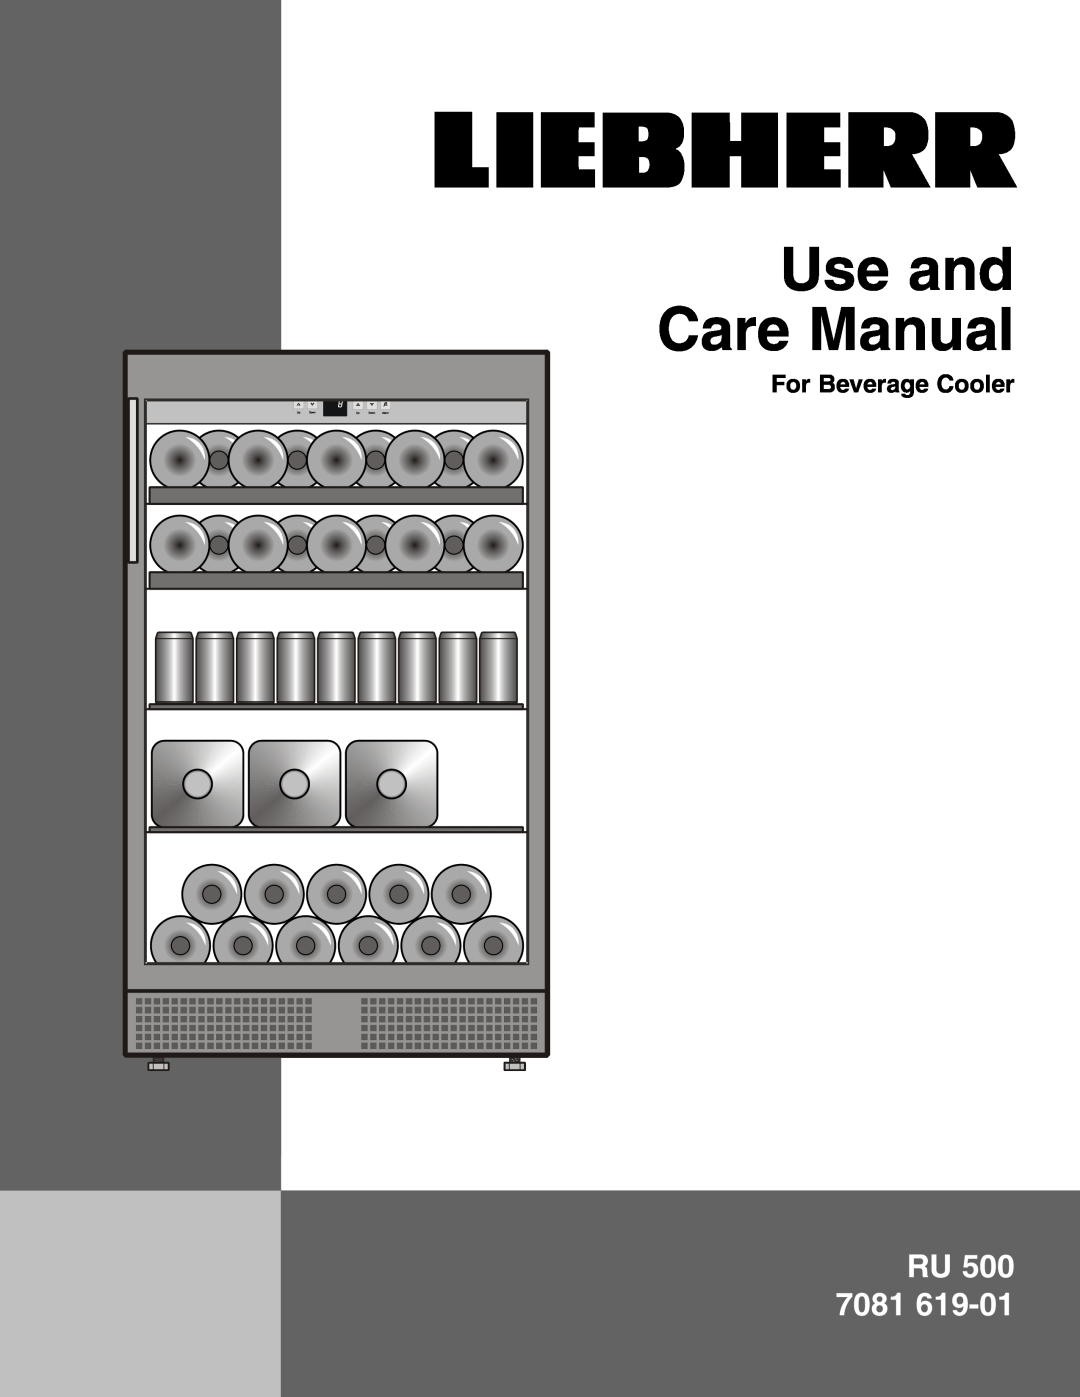 Liebherr RU500 manual For Beverage Cooler, Use and Care Manual, Ru 